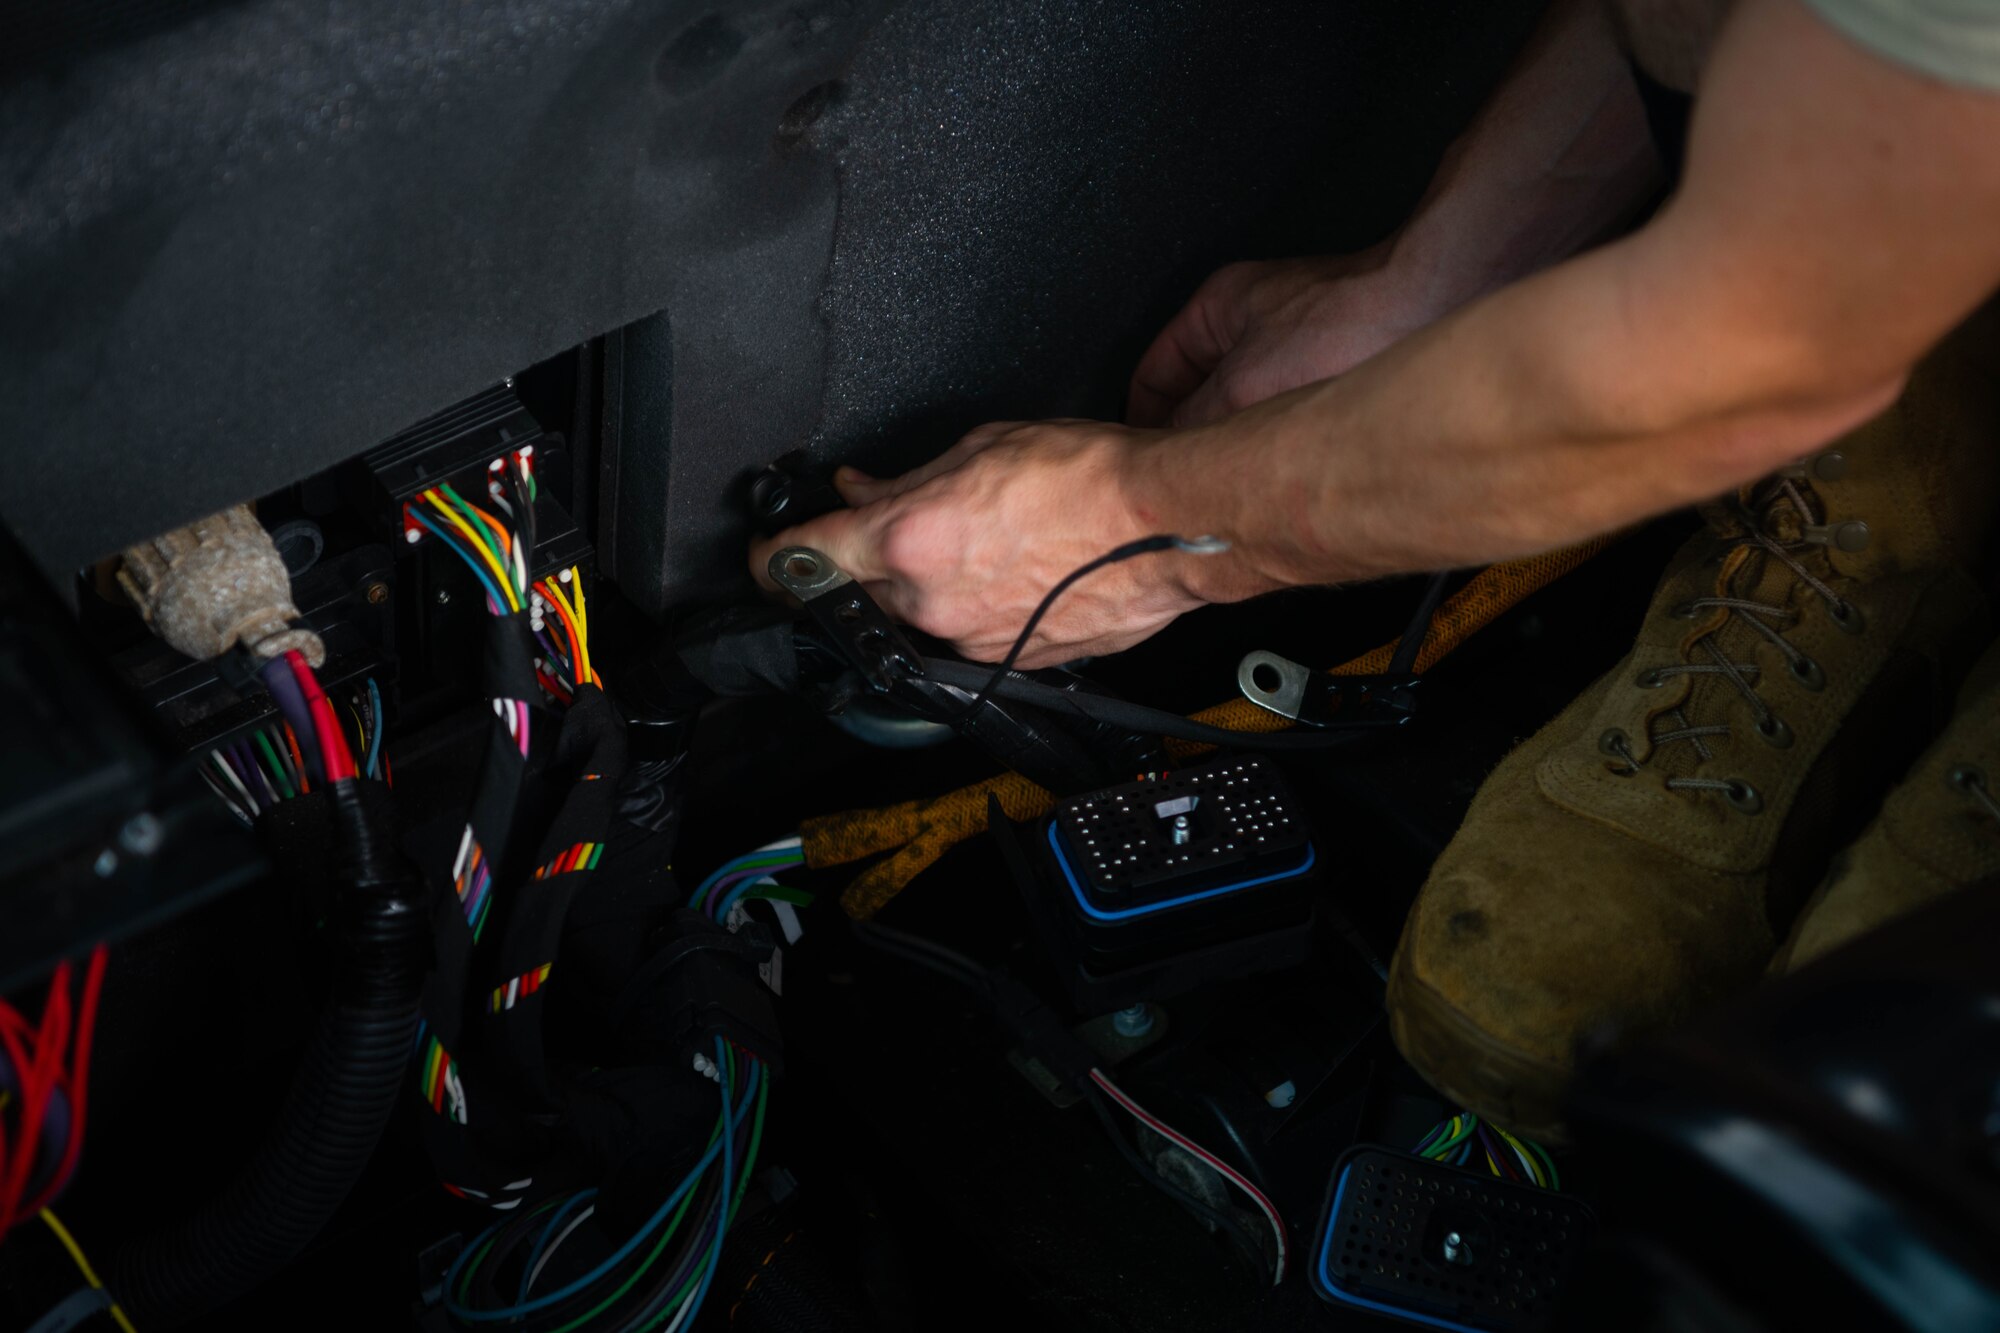 An Airman repairs wiring in a vehicle.